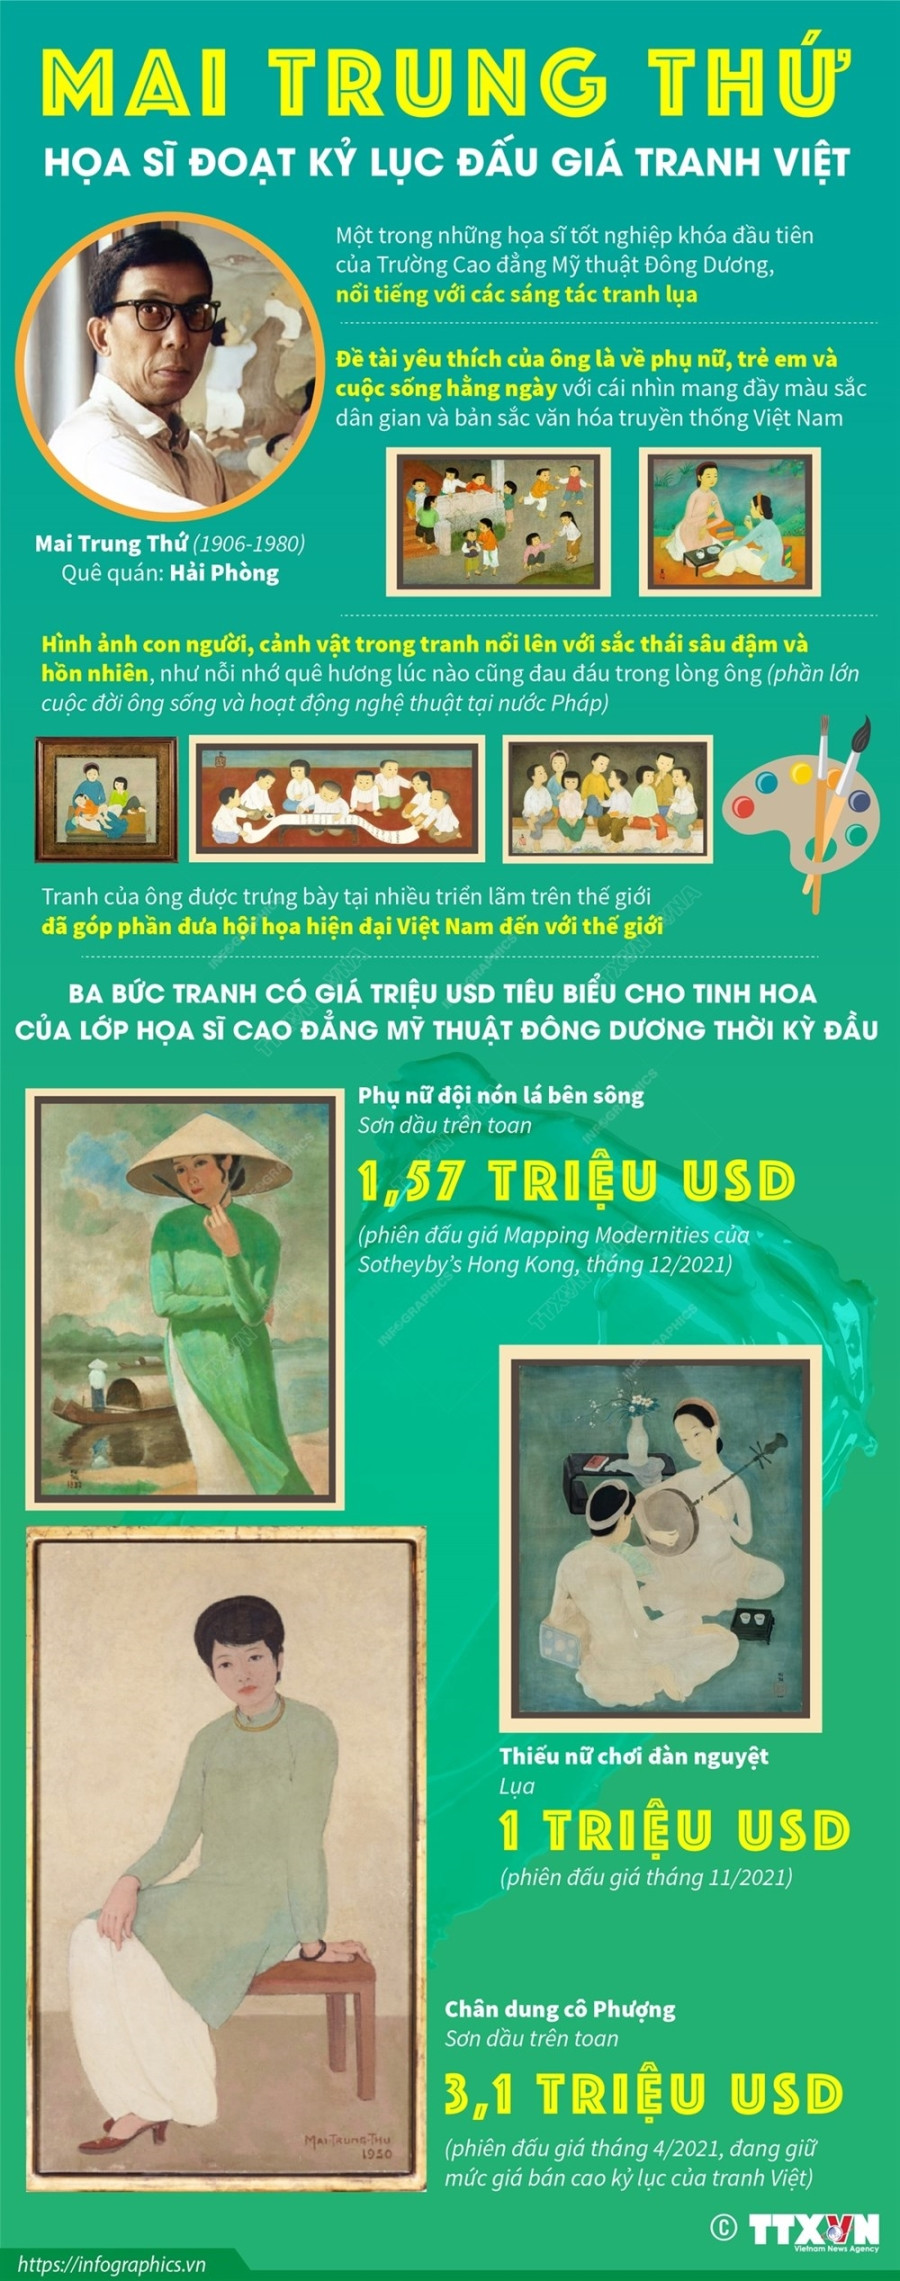 [Infographics] Mai Trung Thu: Hoa sy doat ky luc dau gia tranh Viet hinh anh 1